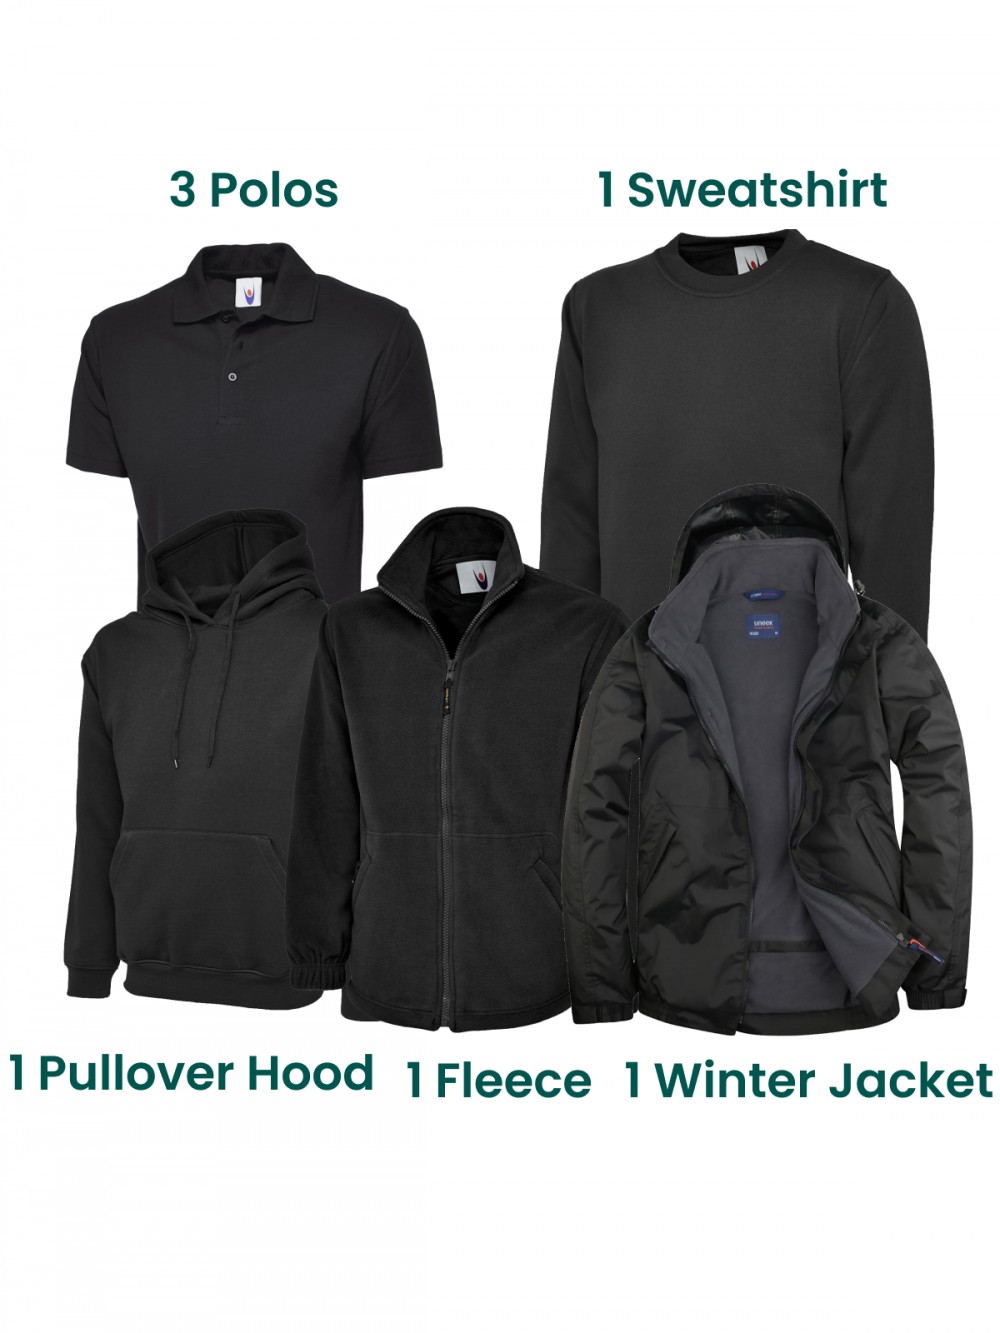 printed / embroidered workwear bundle - 3 polos 1 sweatshirt 1 fleece 1 pullover hood 1 winter jacket